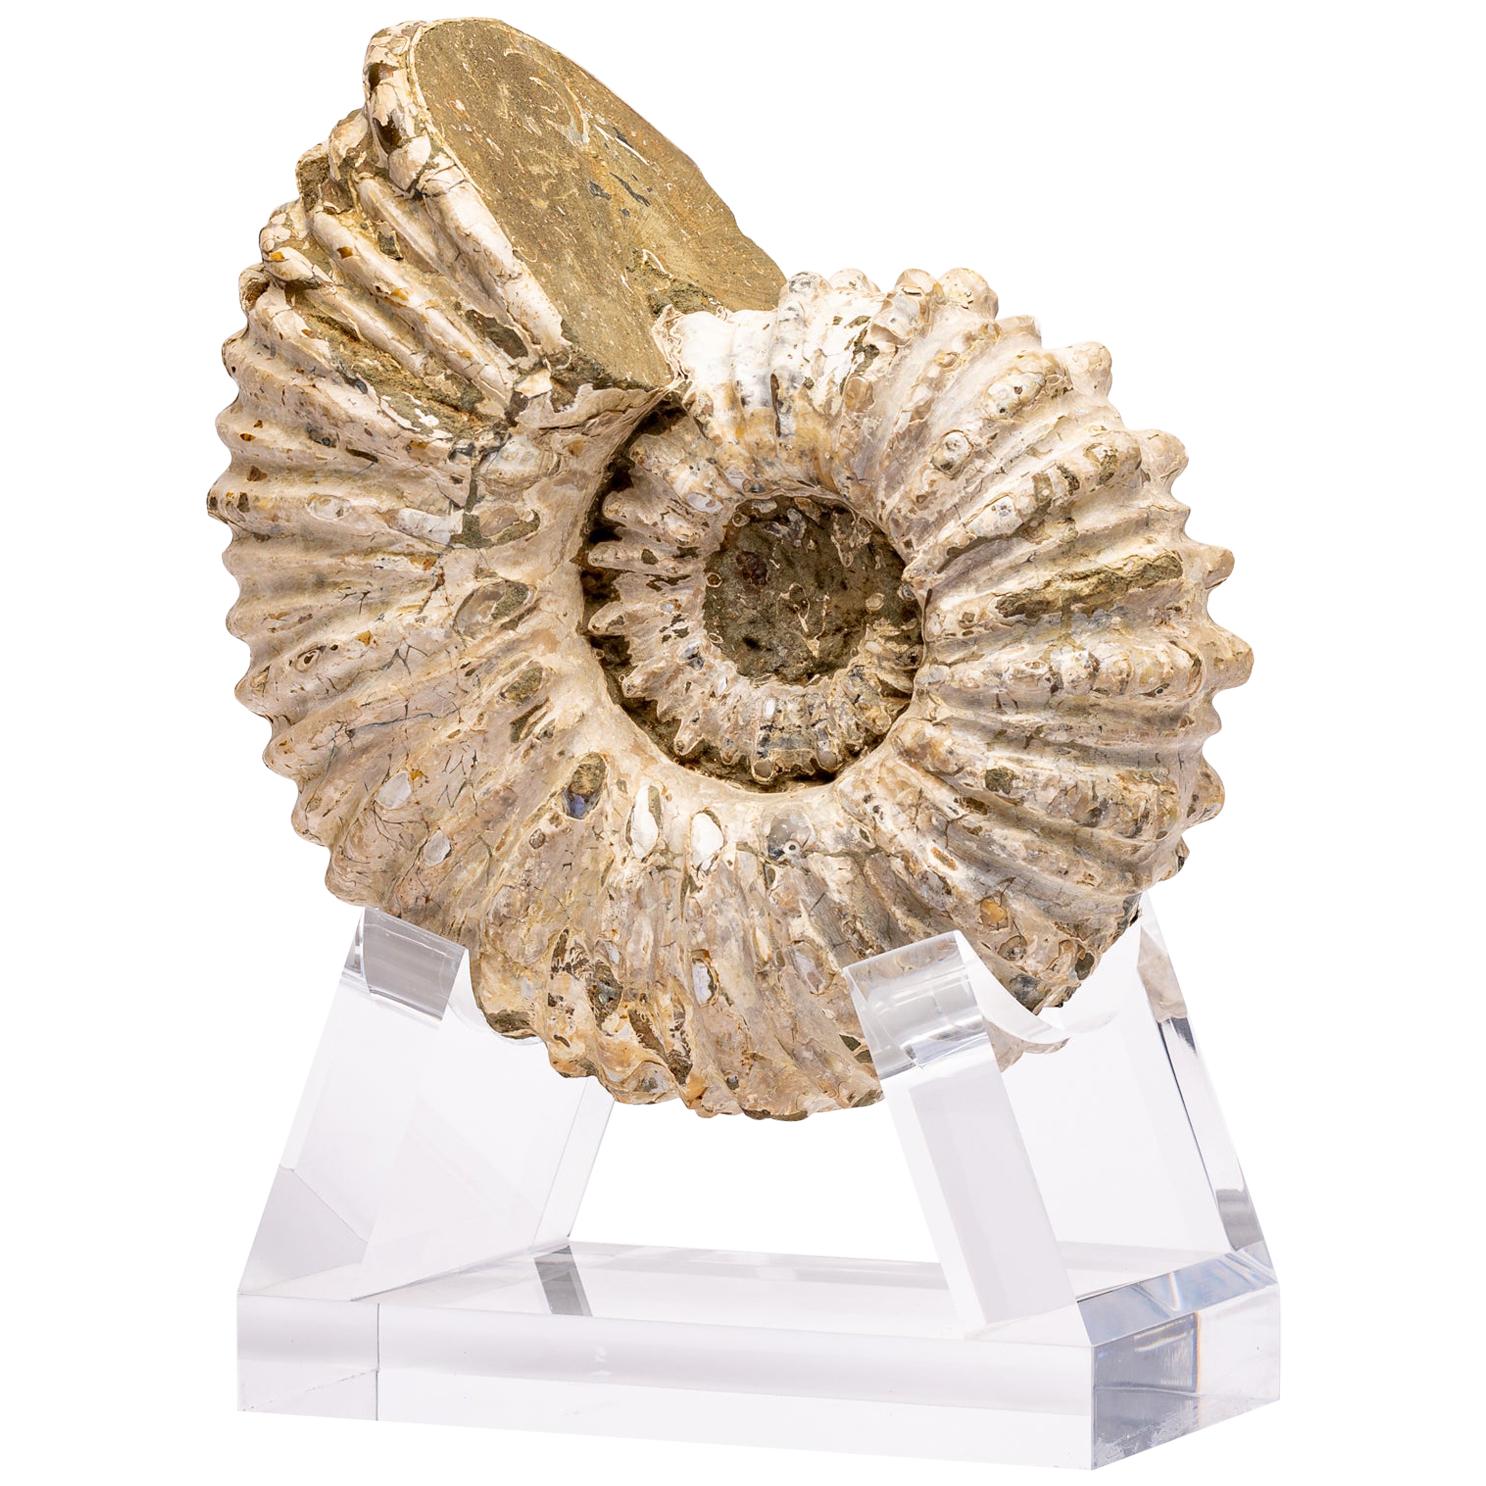 Madagascar Douvilleiceras Ammonite Fossil on Acrylic Base, Cretaceous Period